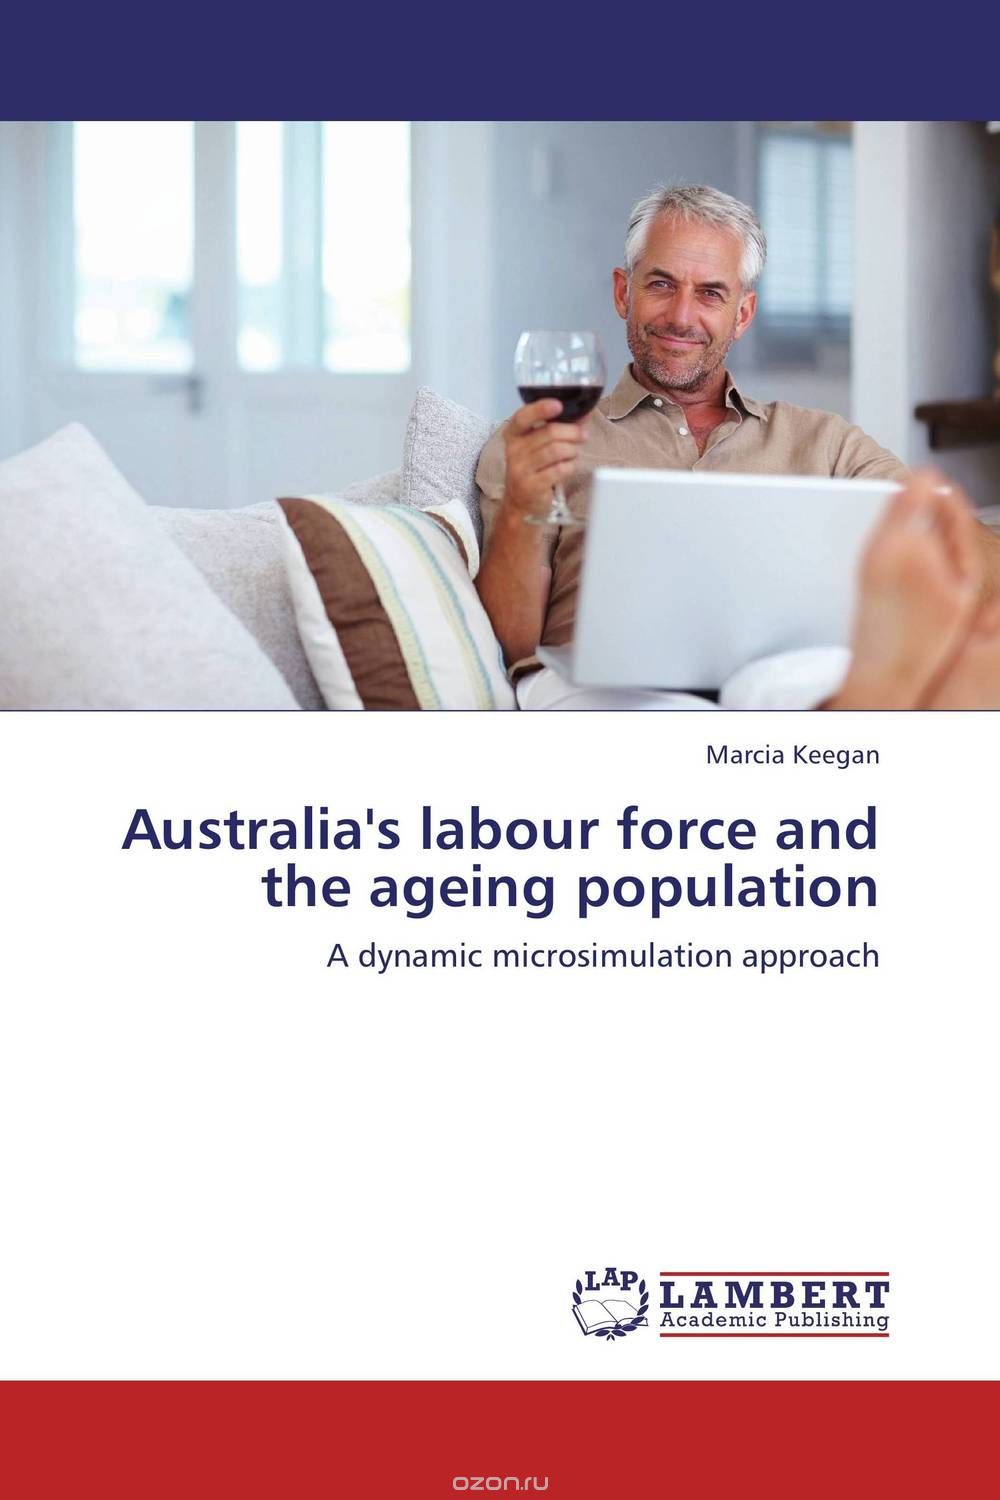 Скачать книгу "Australia's labour force and the ageing population"